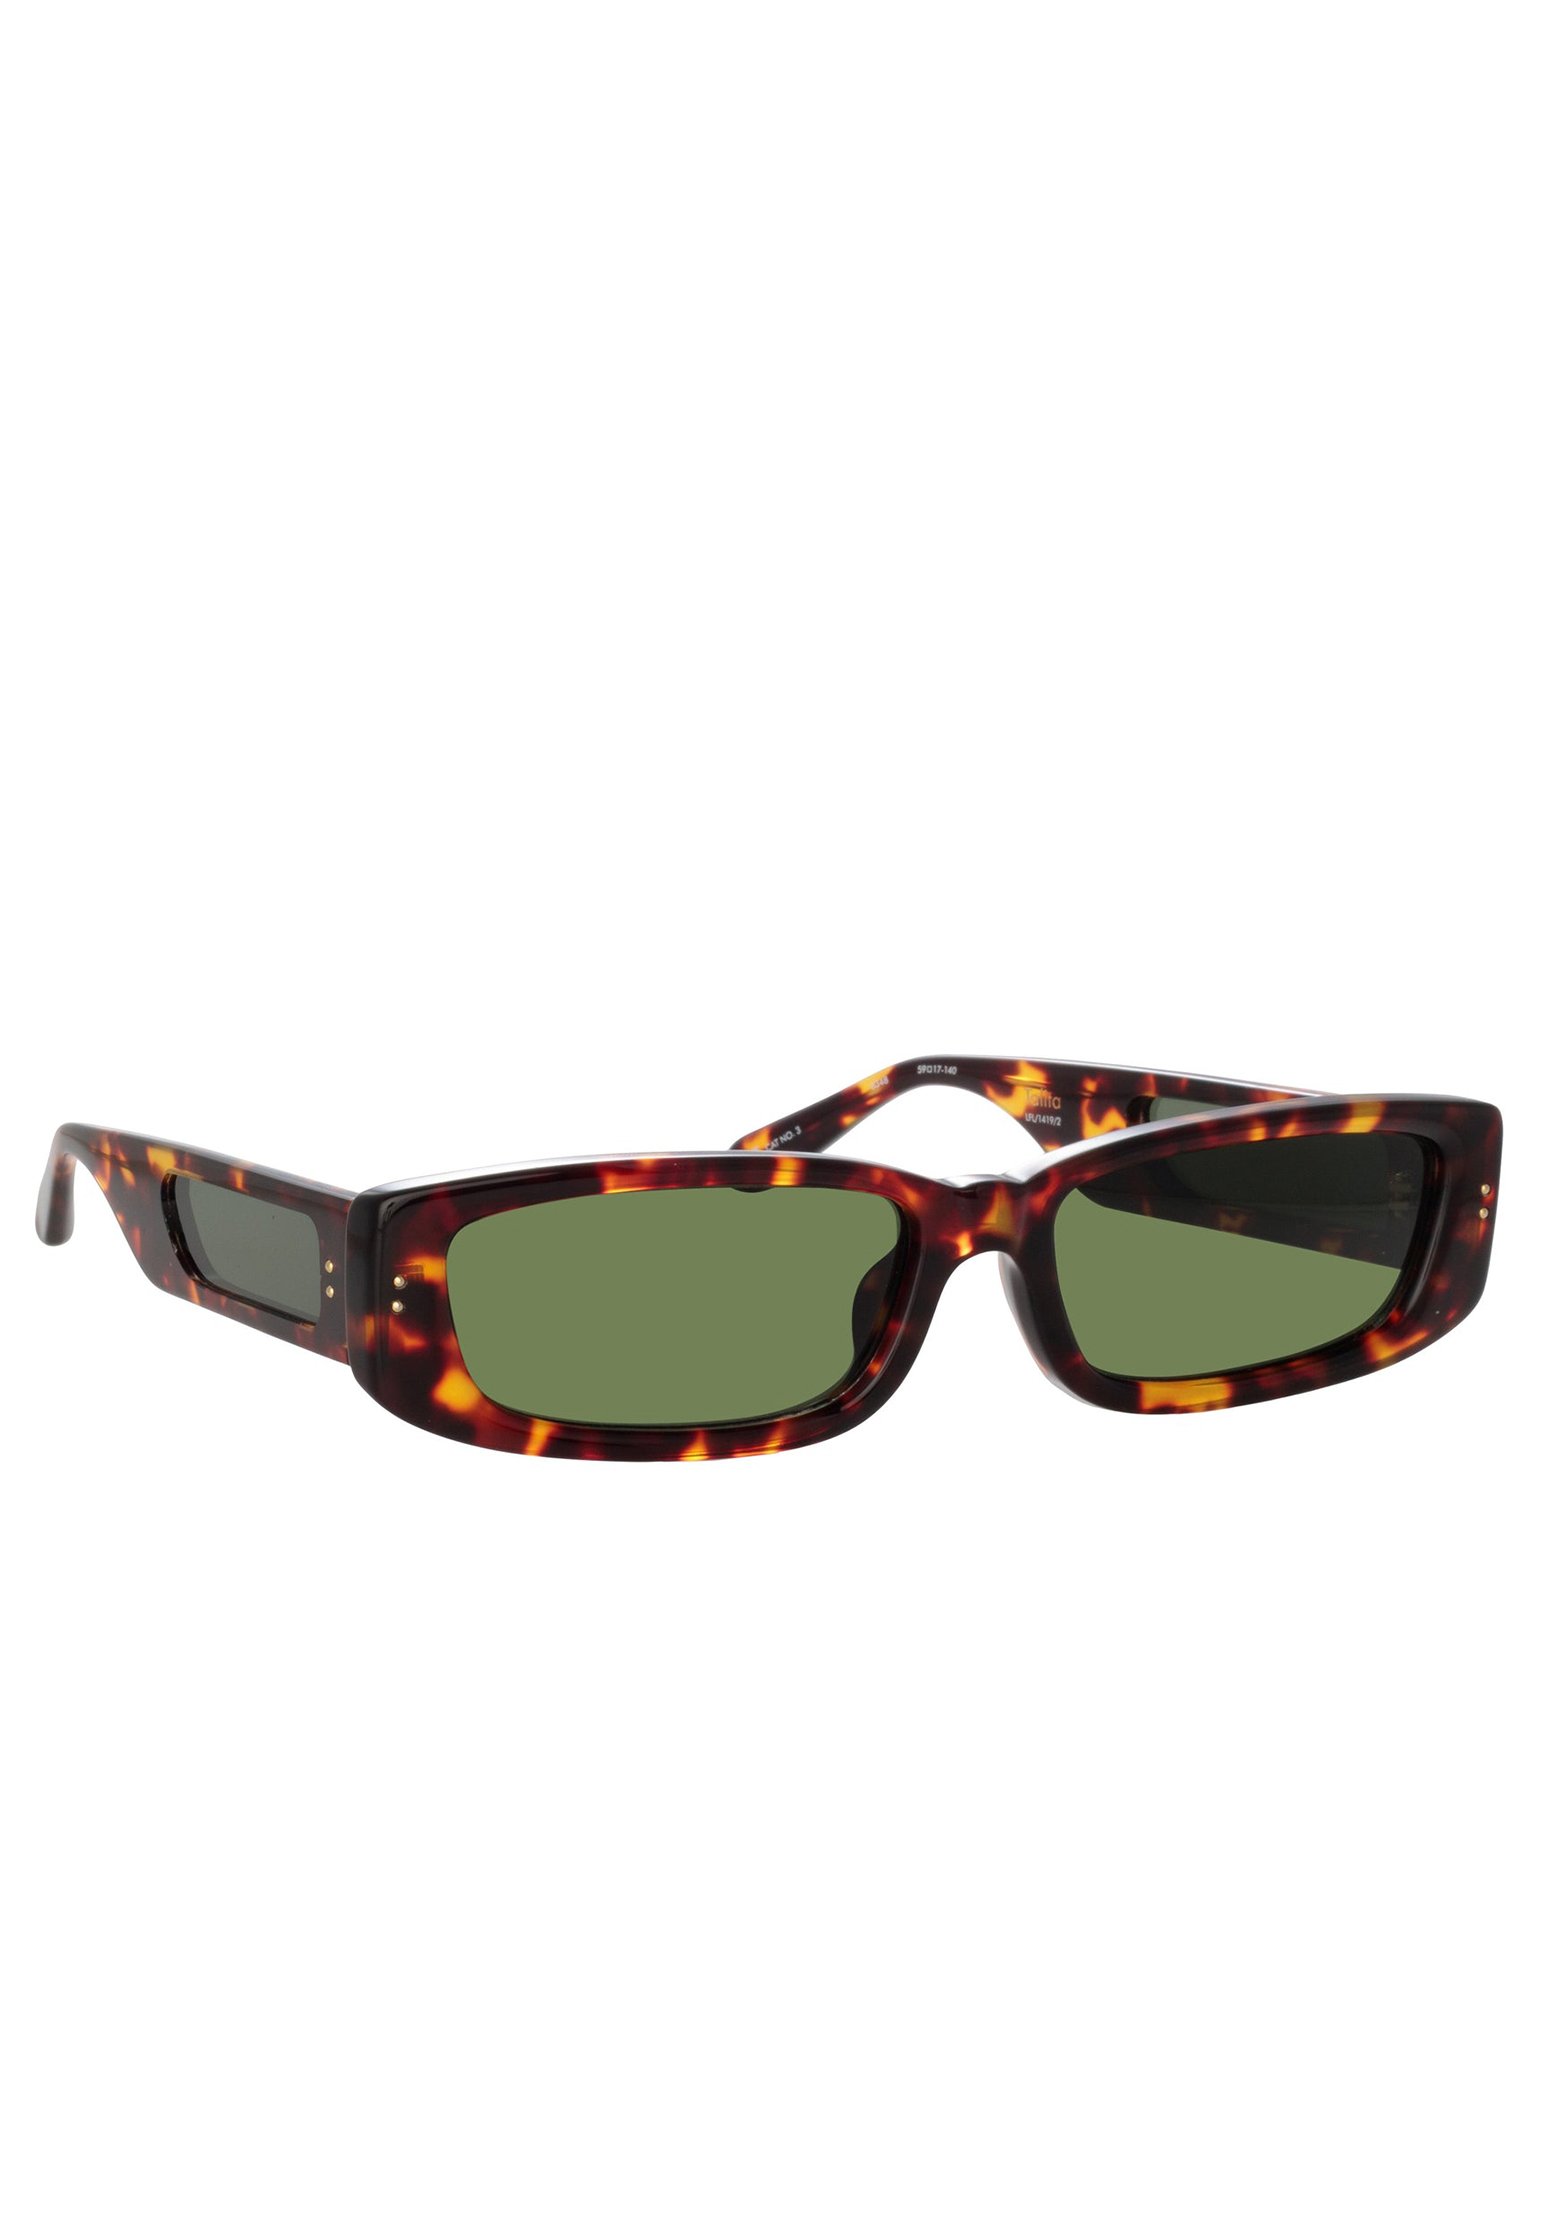 Sunglasses LINDA FARROW Color: brown (Code: 2218) in online store Allure